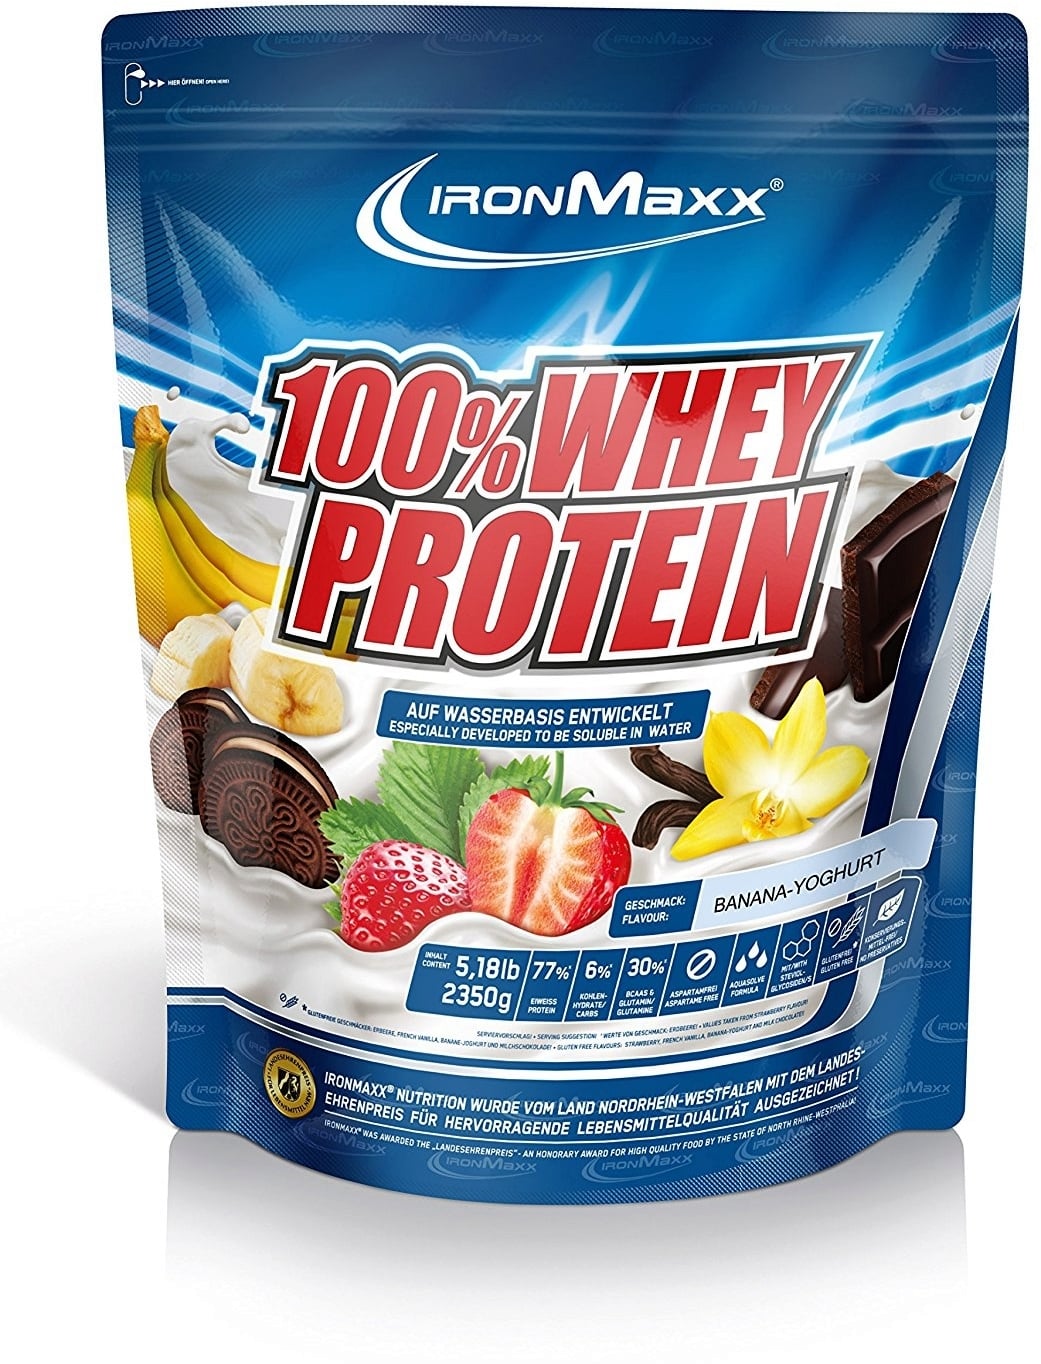 ironMaxx 100% Whey Protein 2350g Beutel - Banane-Yoghurt